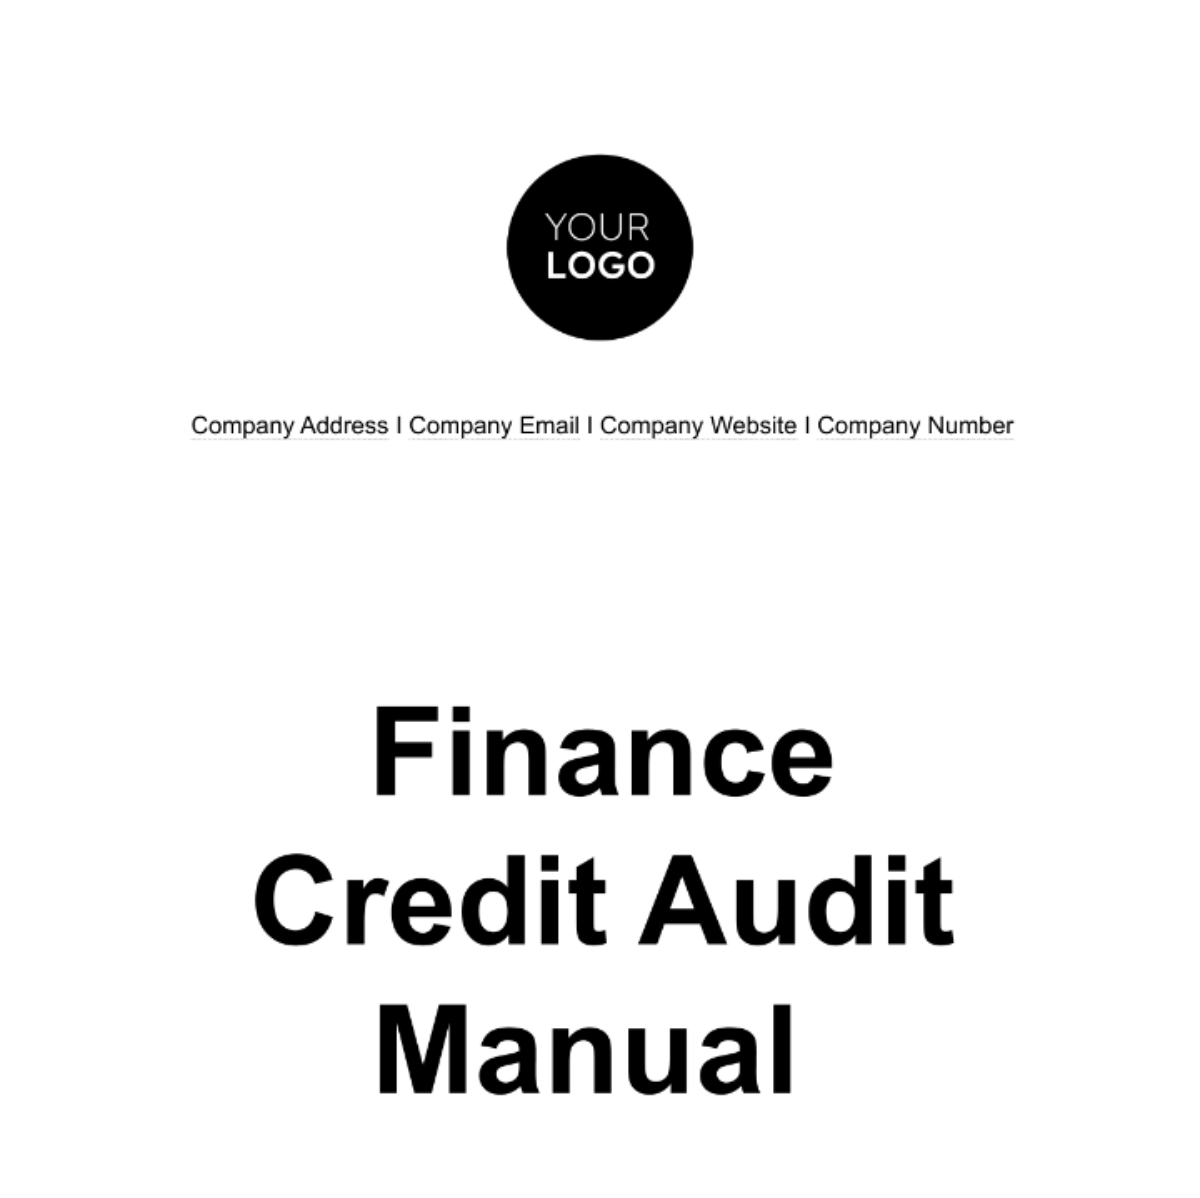 Finance Credit Audit Manual Template